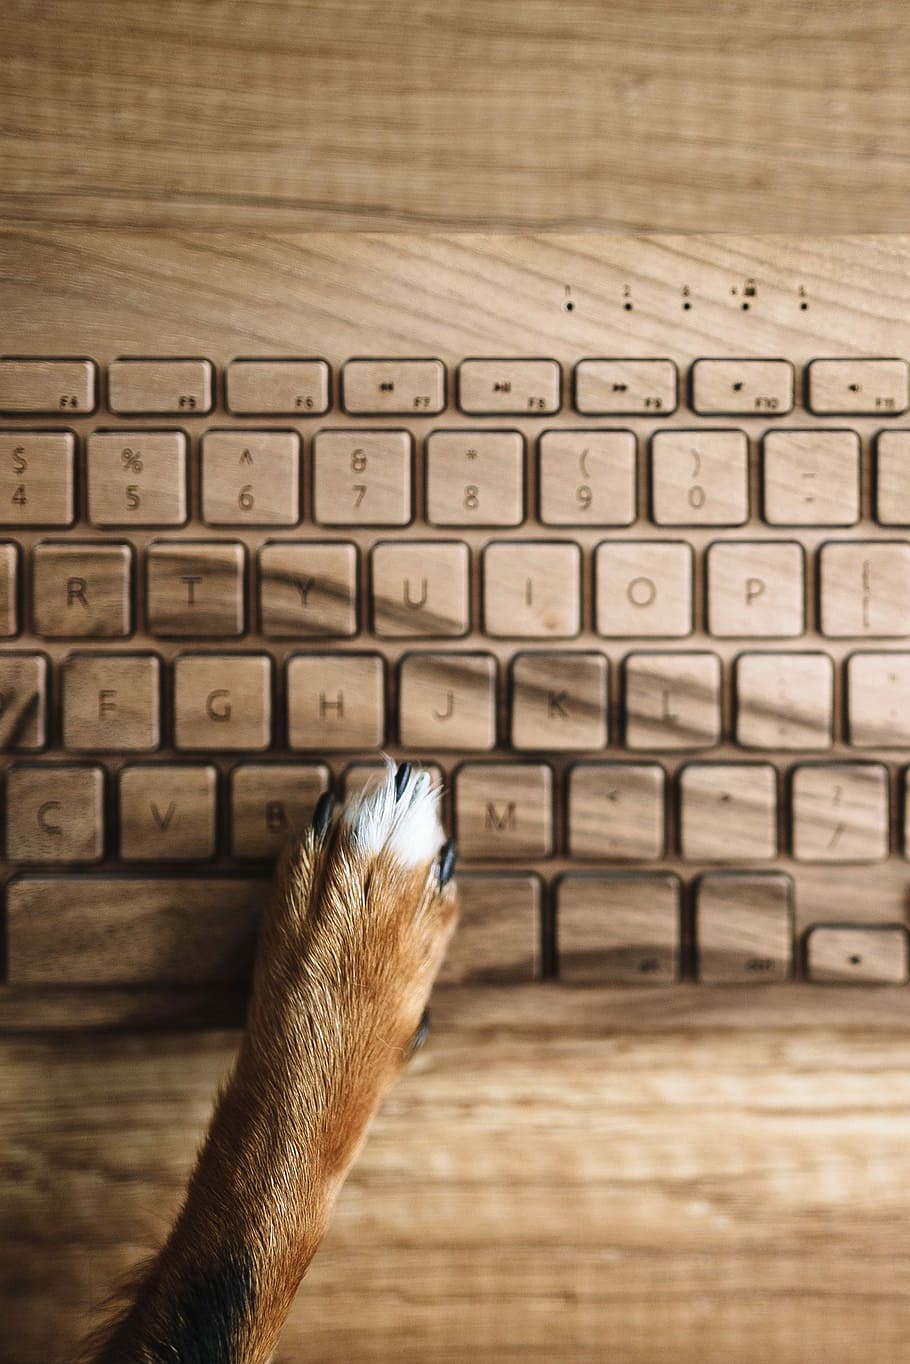 лапа собаки, деревянный, клавиатура, собаки, лапа, технология, собака, домашнее животное, животное, деревянная клавиатура